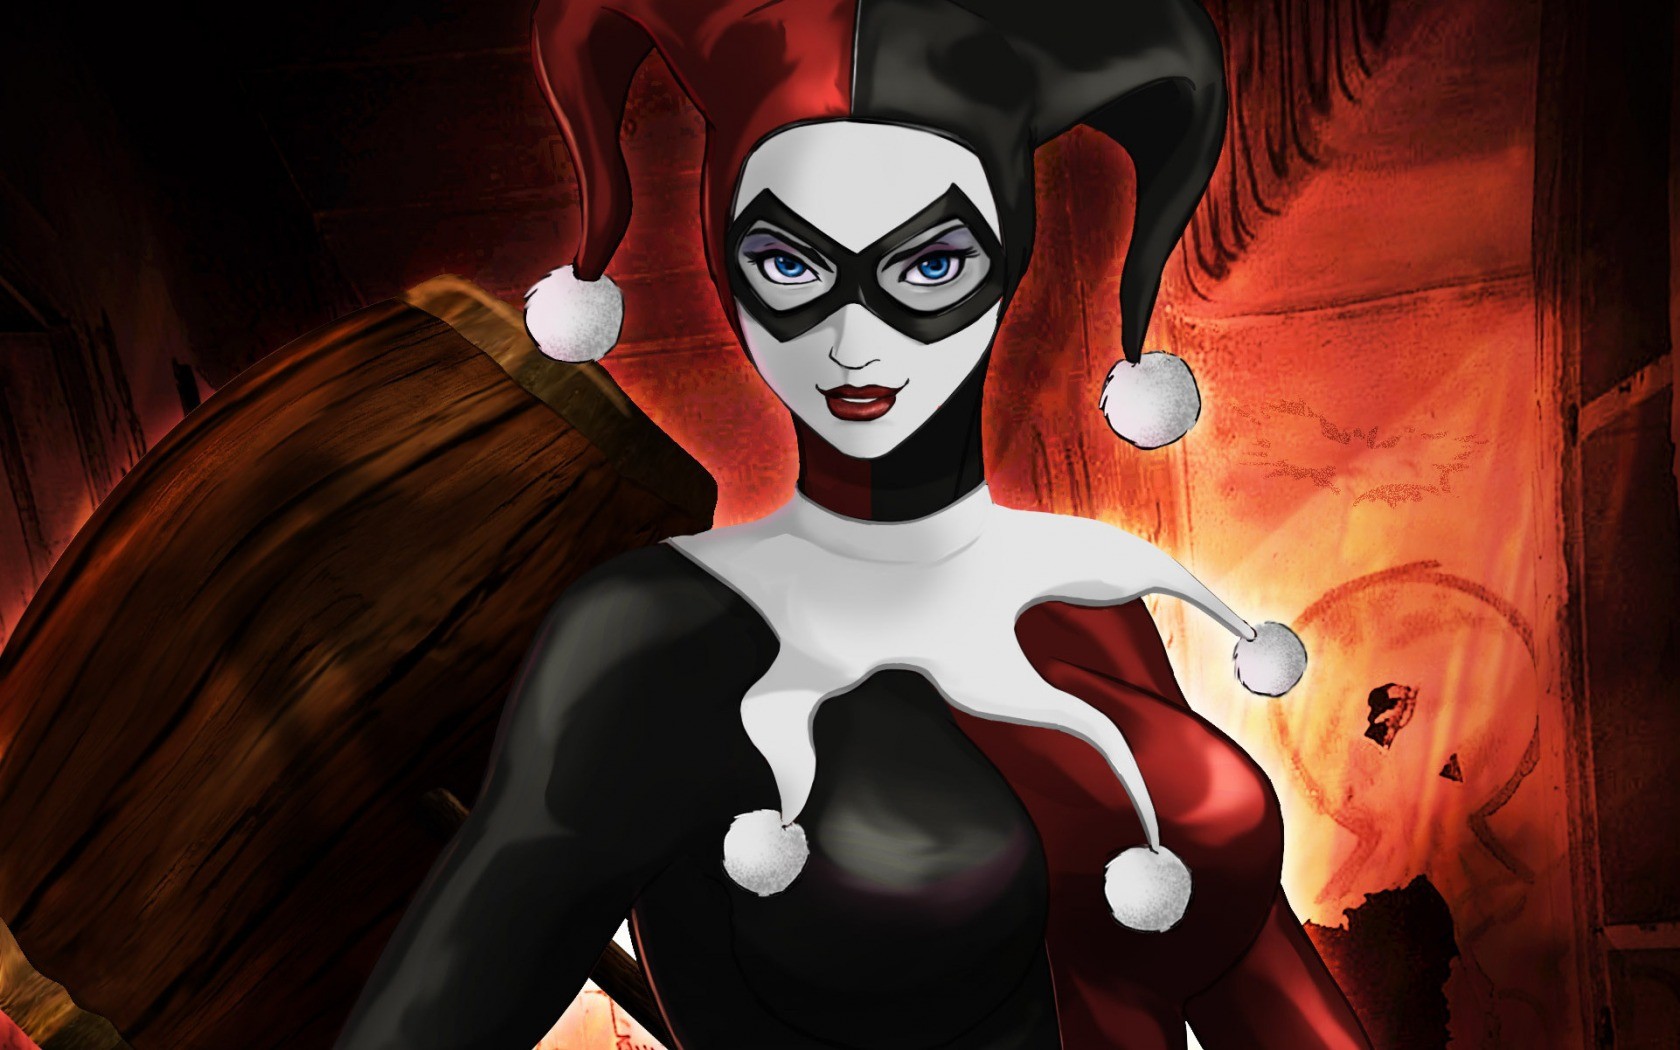 General 1680x1050 Harley Quinn Batman DC Comics digital art women mask villains boobs big boobs red lipstick looking at viewer